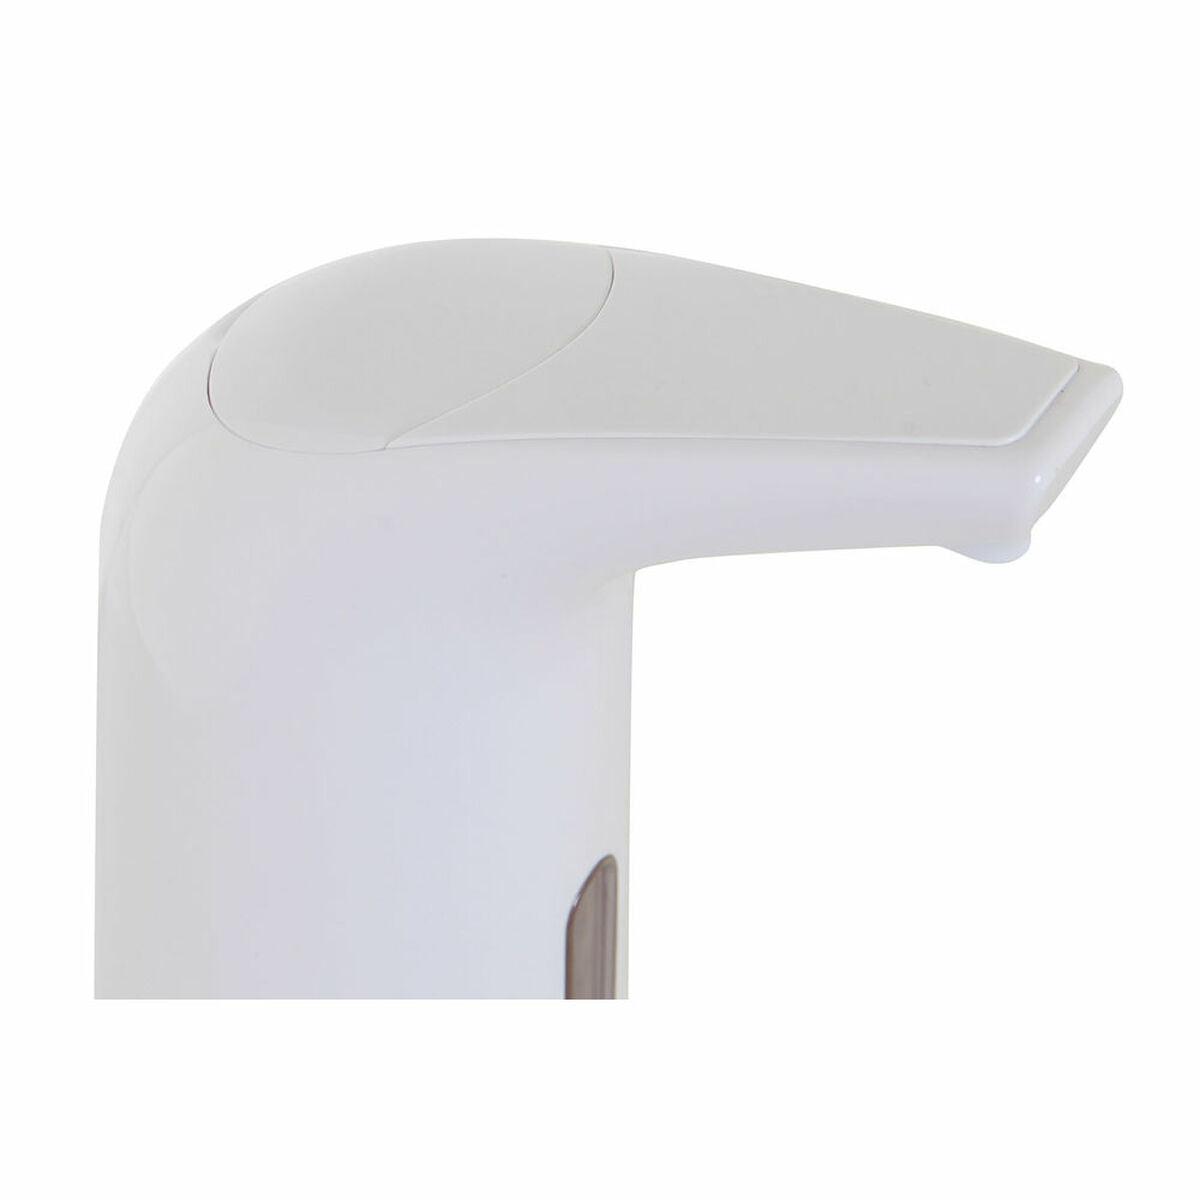 Automatic Soap Dispenser with Sensor DKD Home Decor 8424001815968 11,6 x 7 x 21,4 cm White ABS 400 ml